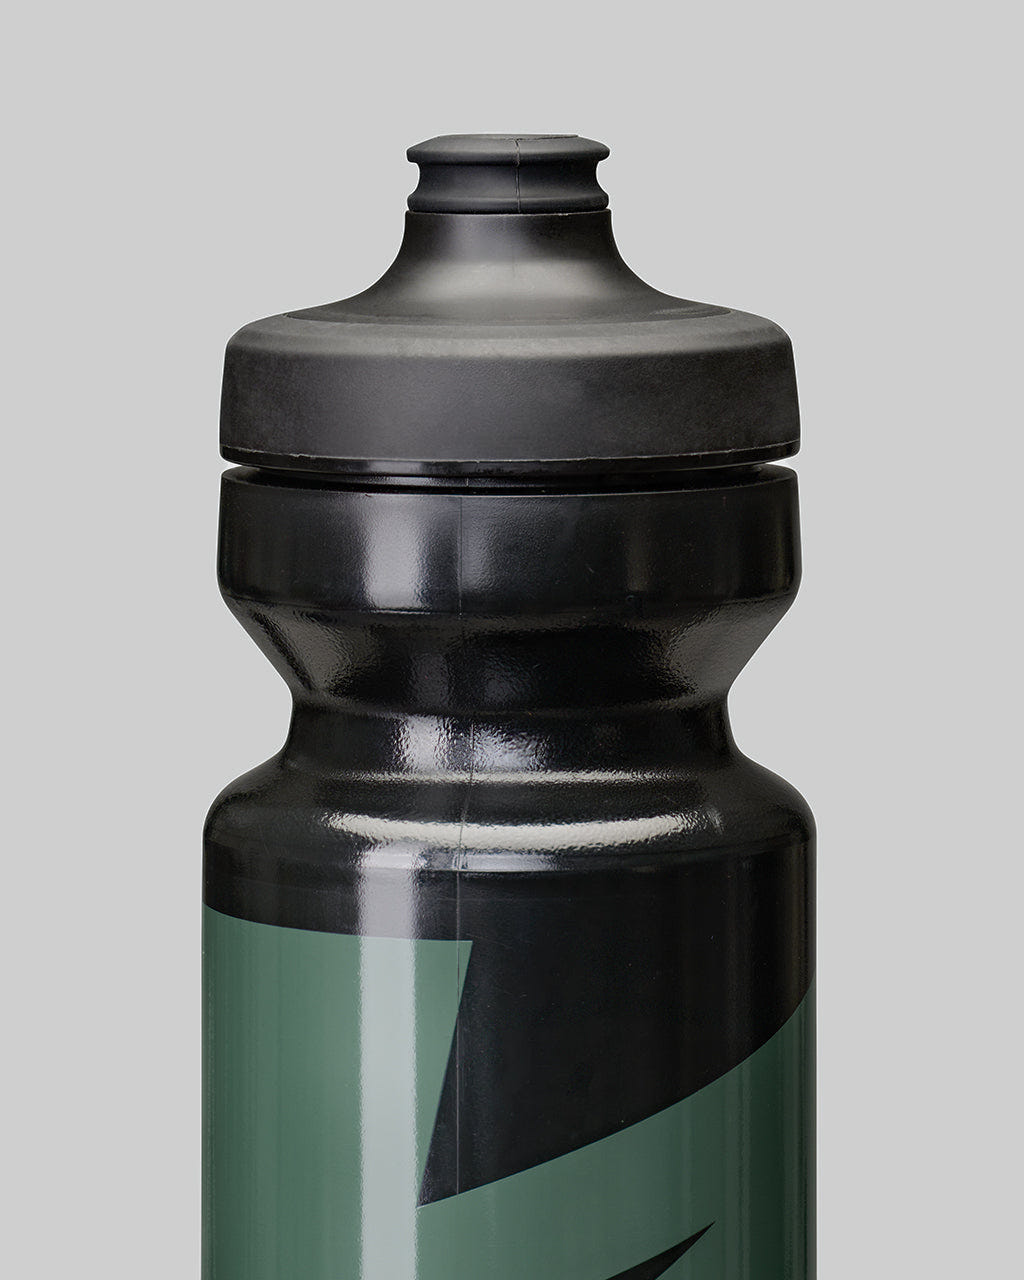 Stanley Master Vacuum Water Bottle, 22oz, Olive Drab